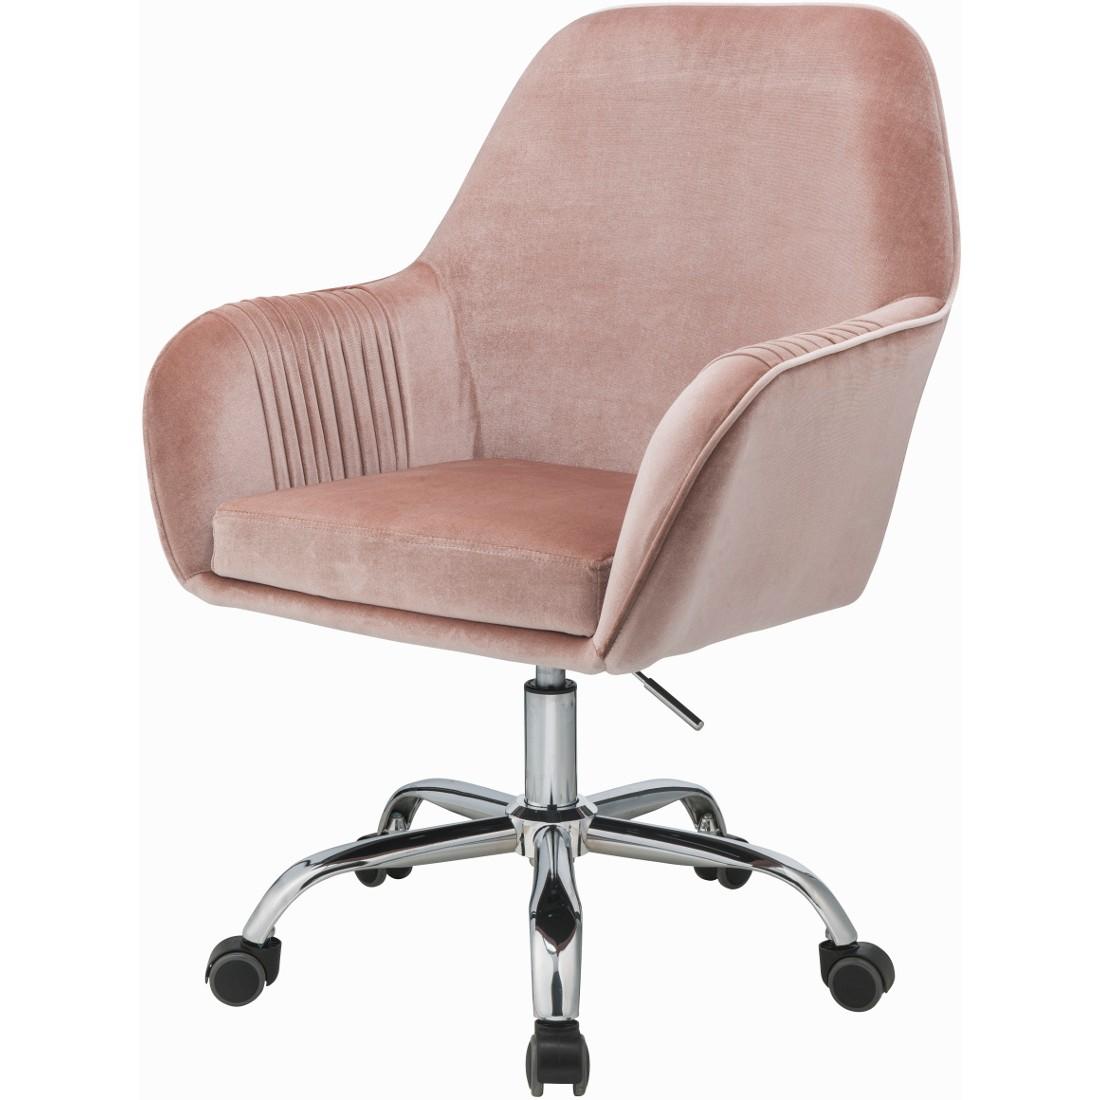 Contemporary Office Chair Eimer Eimer 92504 in Peach Fabric